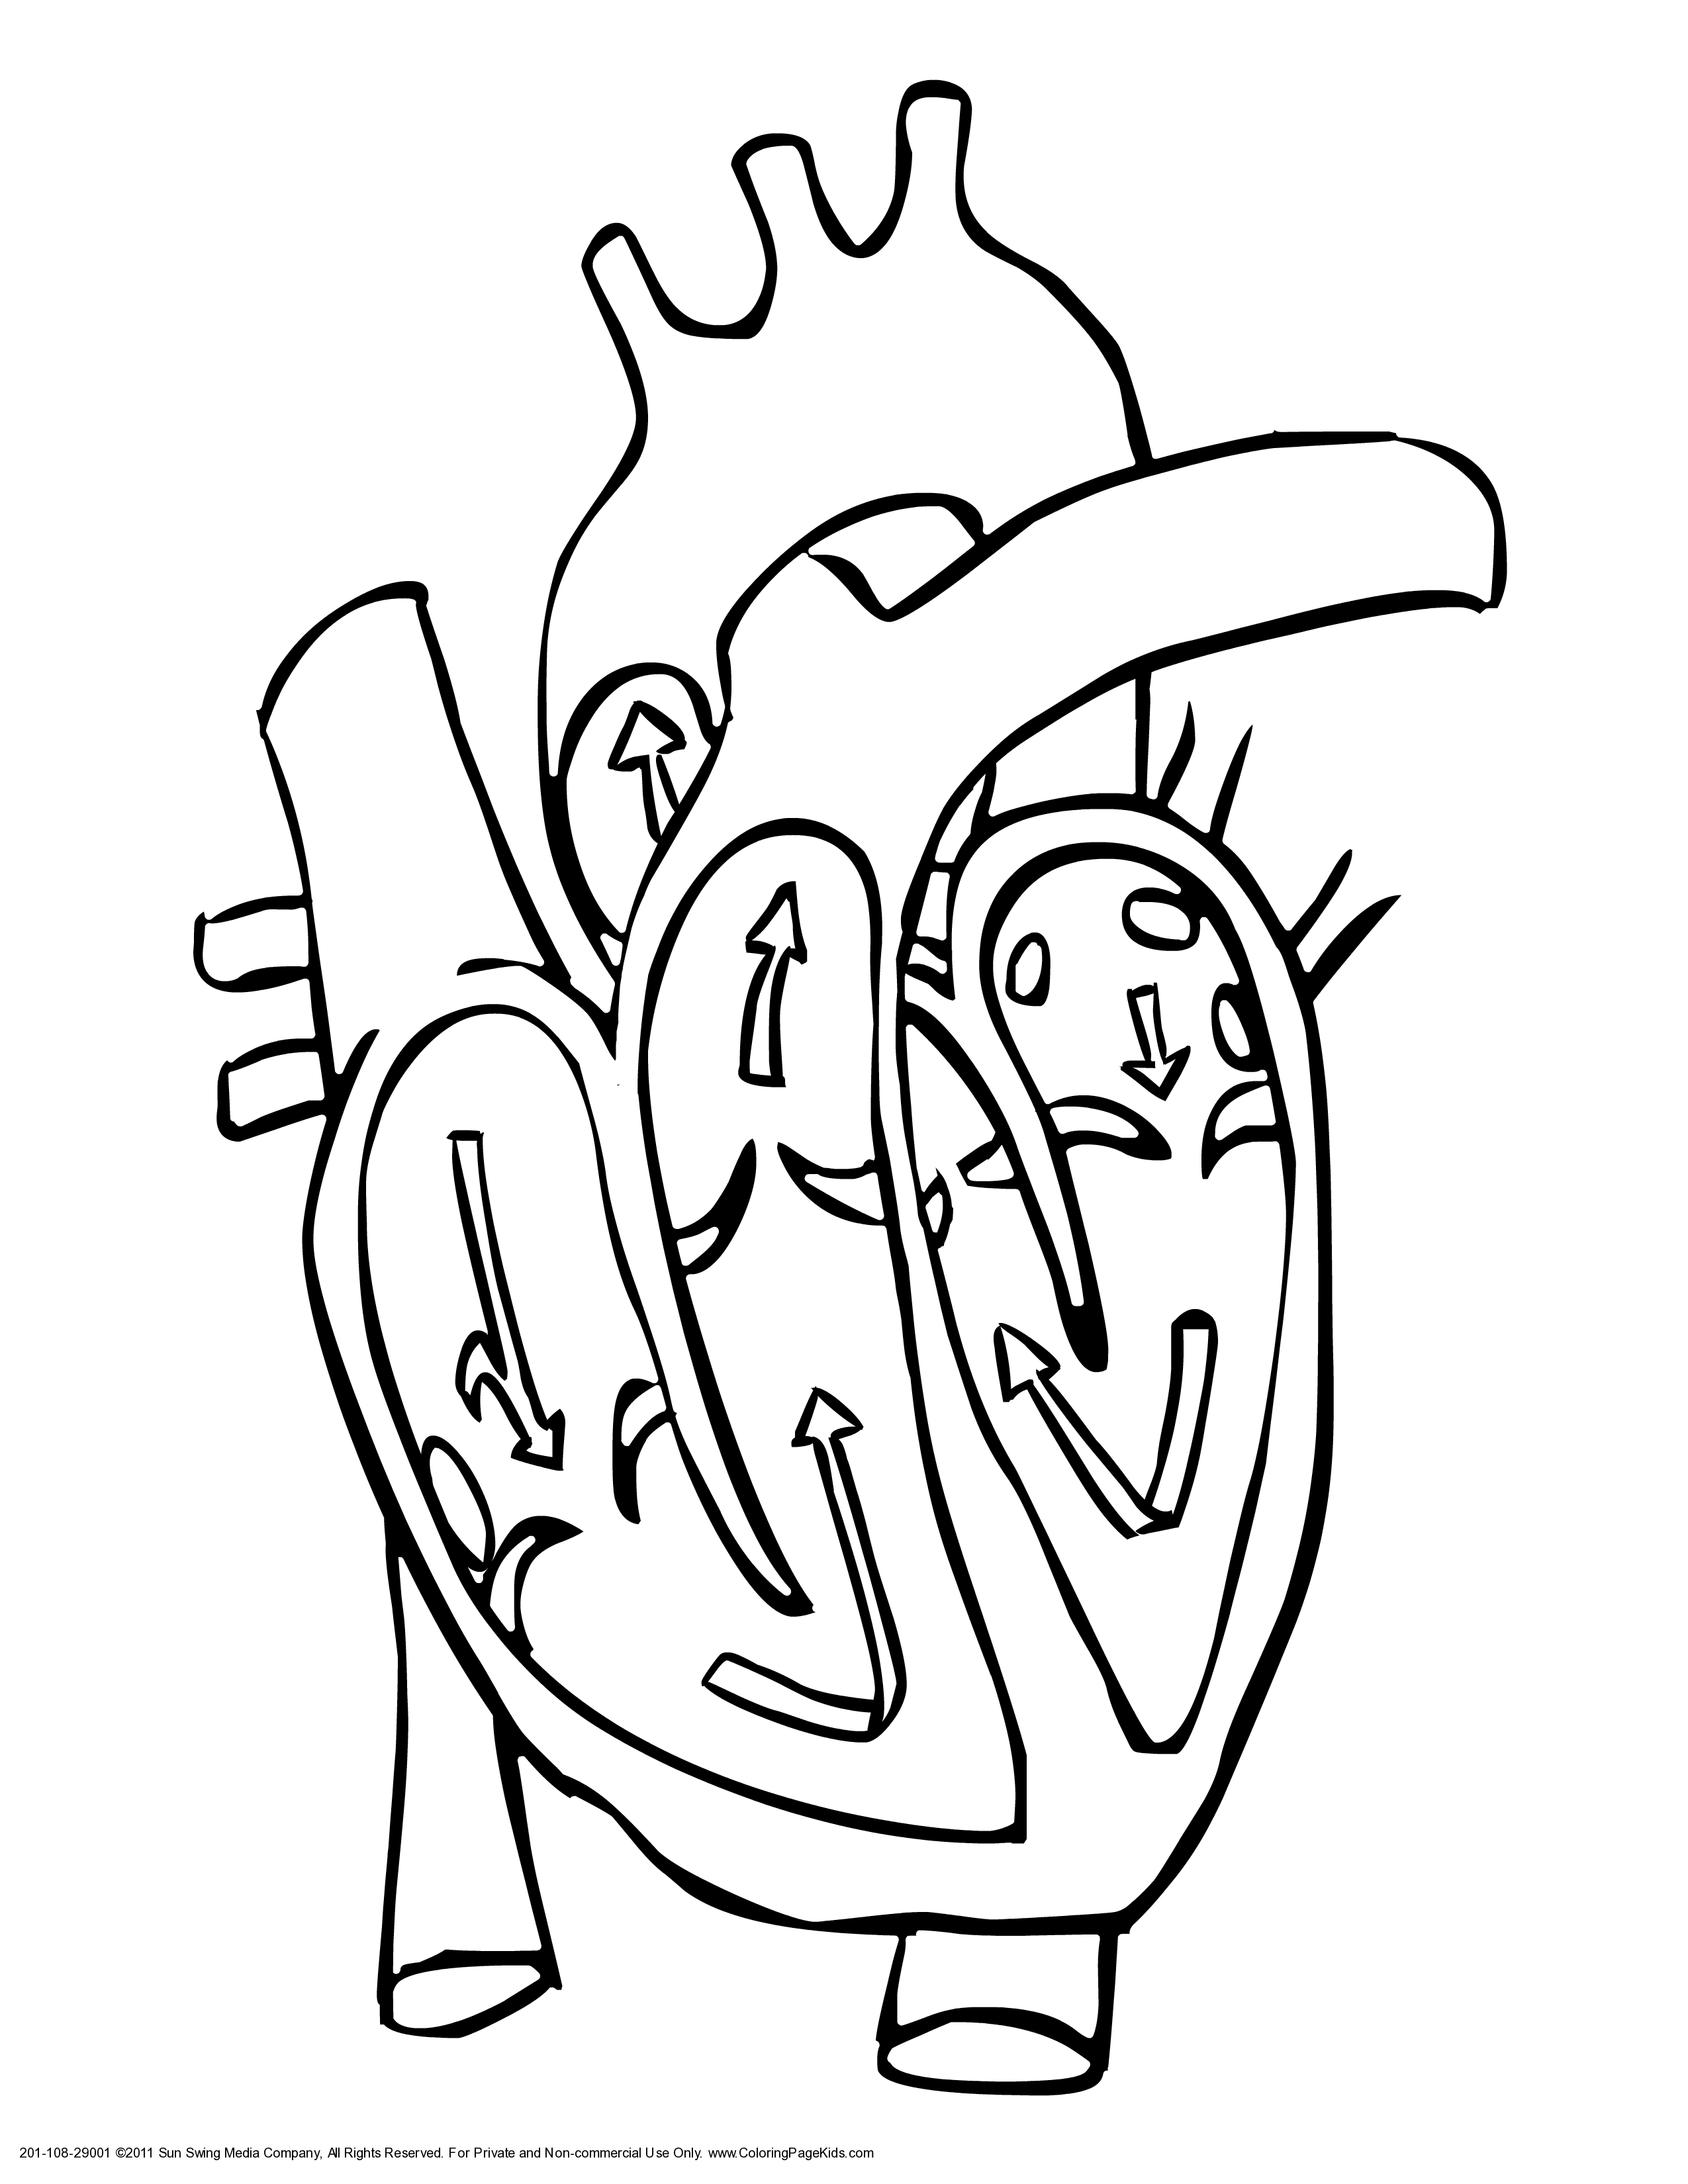 Human Heart Unlabeled ClipArt Best